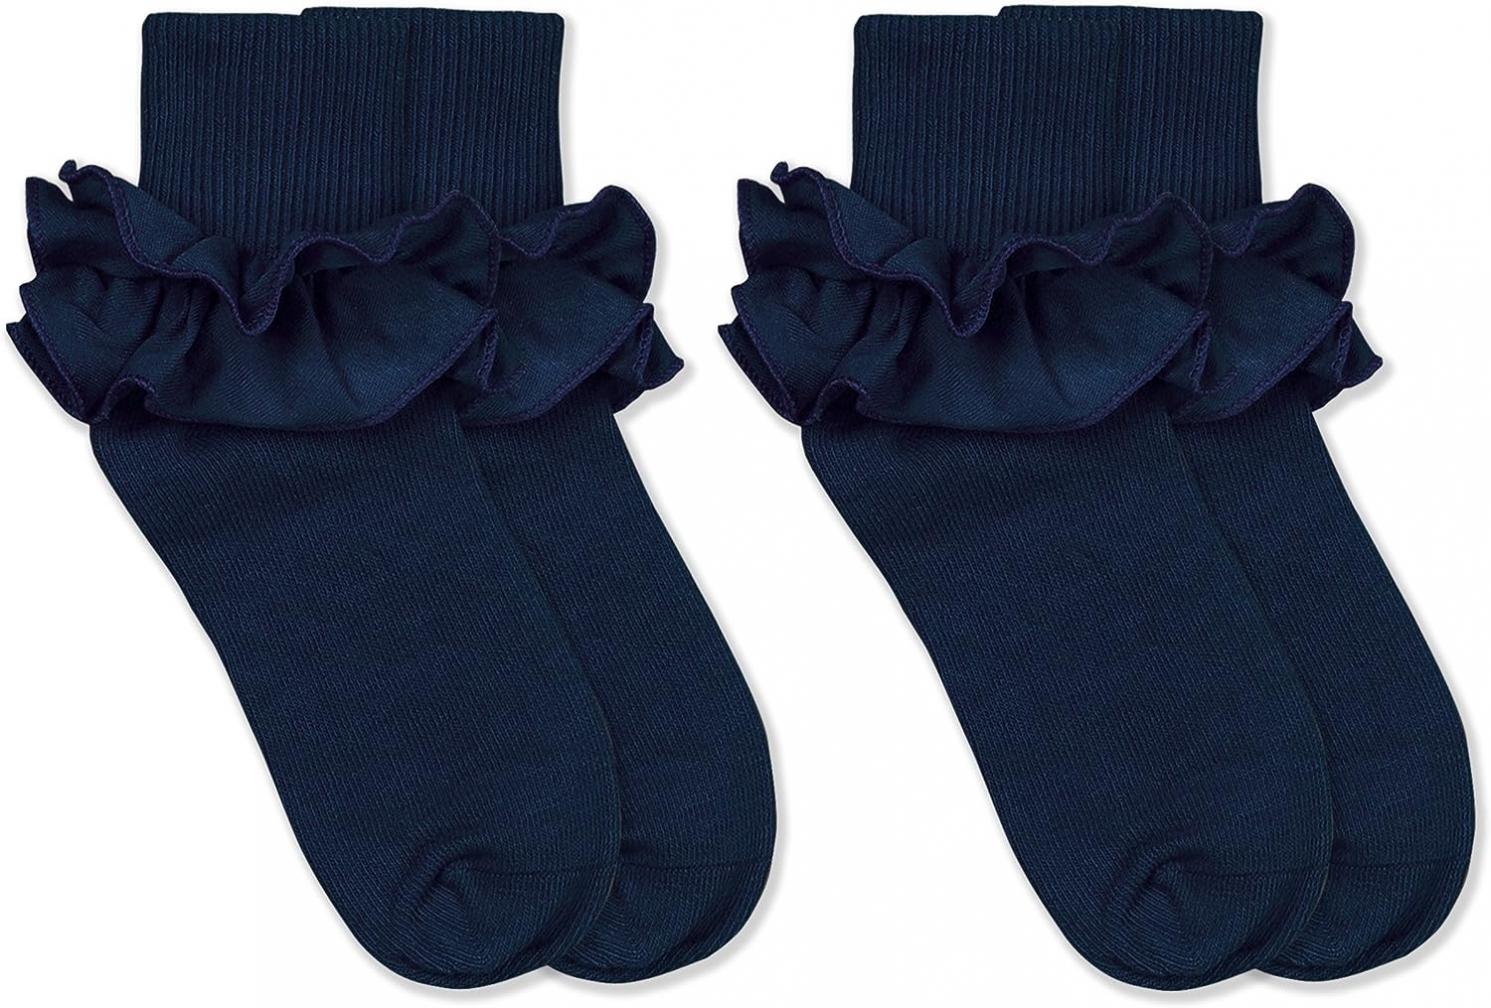 Jefferies Socks Girls Misty Ruffle Lace School Uniform Dress Turn Cuff Socks 2 Pair Pack